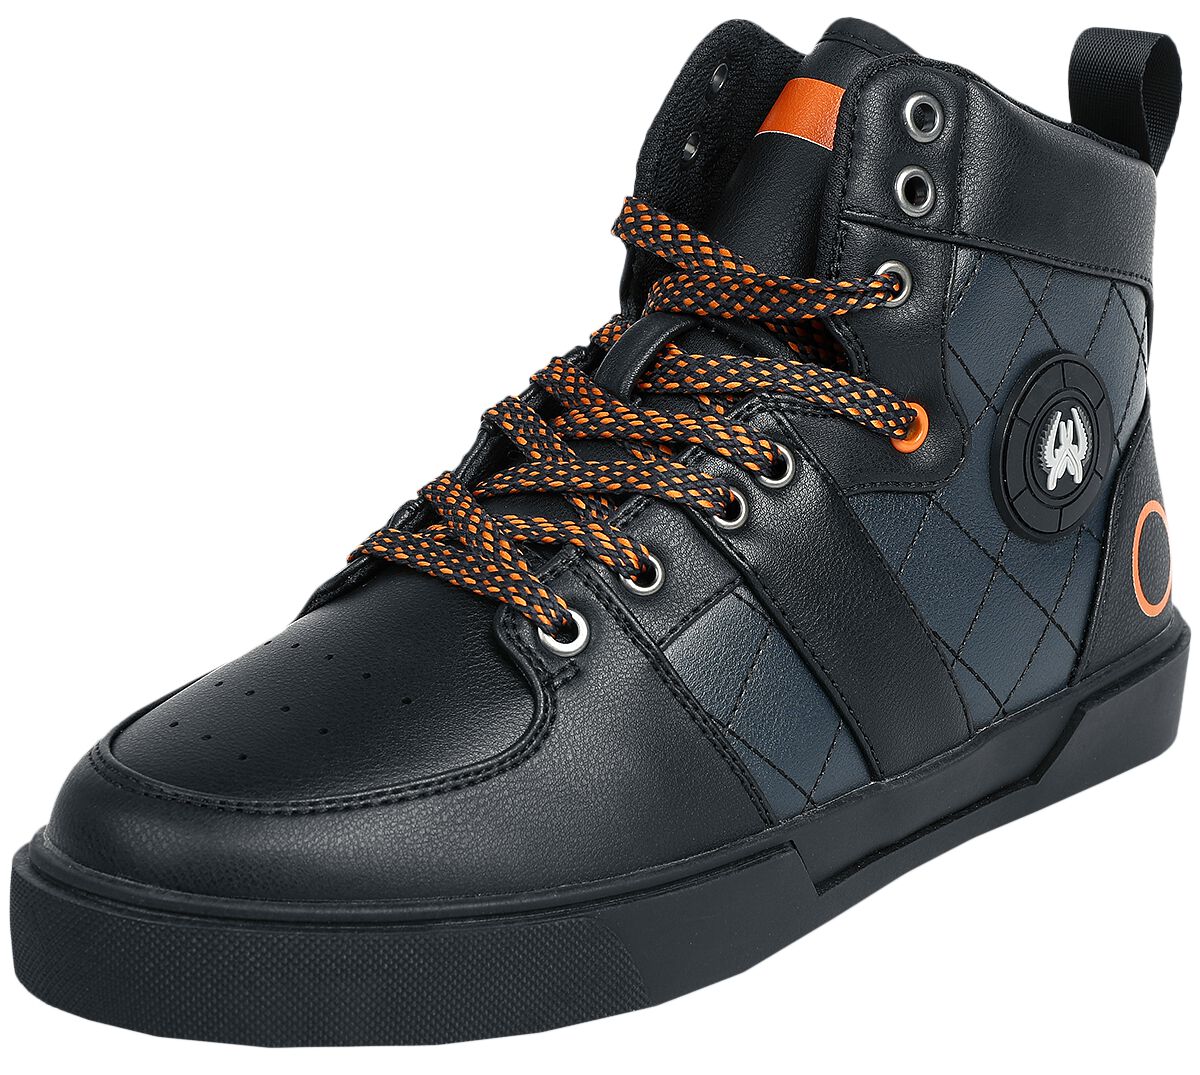 Counter-Strike - Gaming Sneaker high - Global Offensive - CS:GO - EU37 bis EU44 - Größe EU40 - schwarz/blau  - EMP exklusives Merchandise!